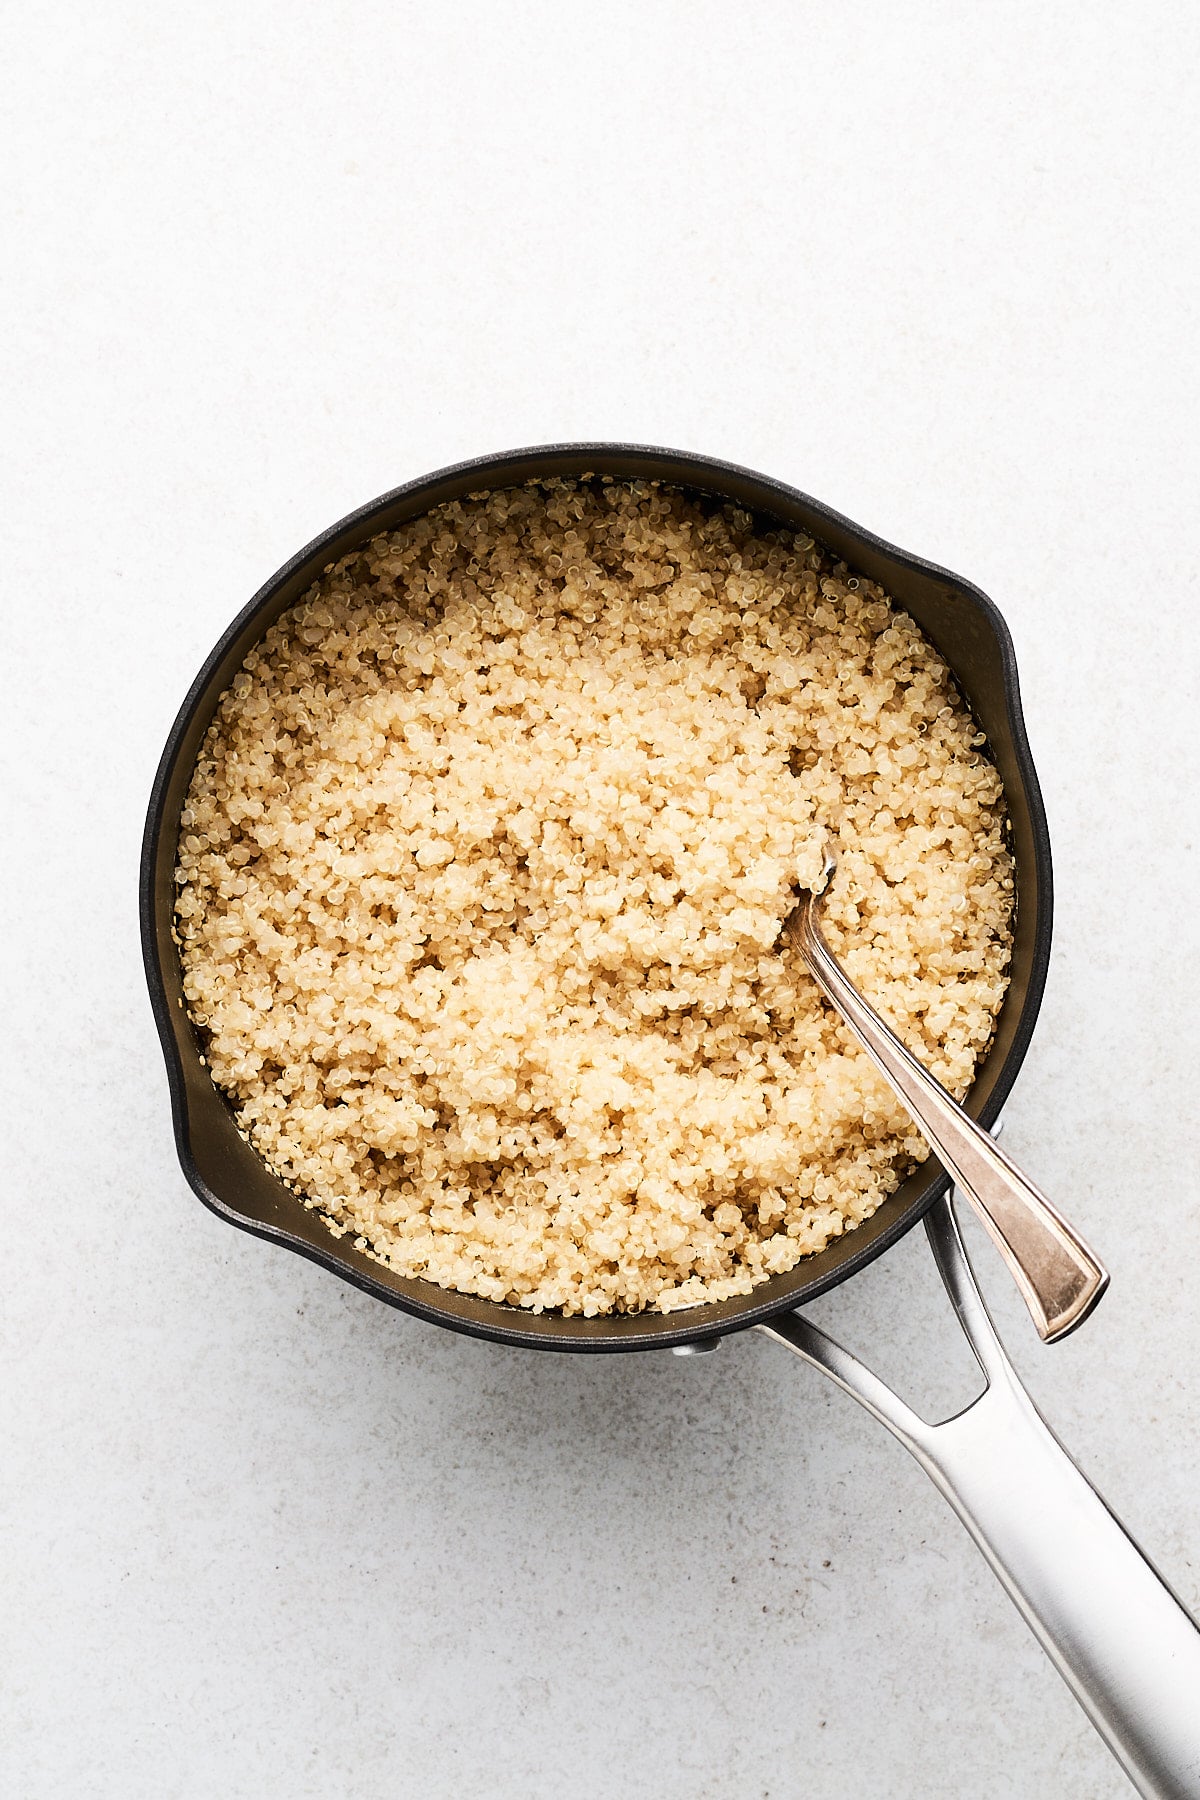 Fluffed quinoa in a pot.